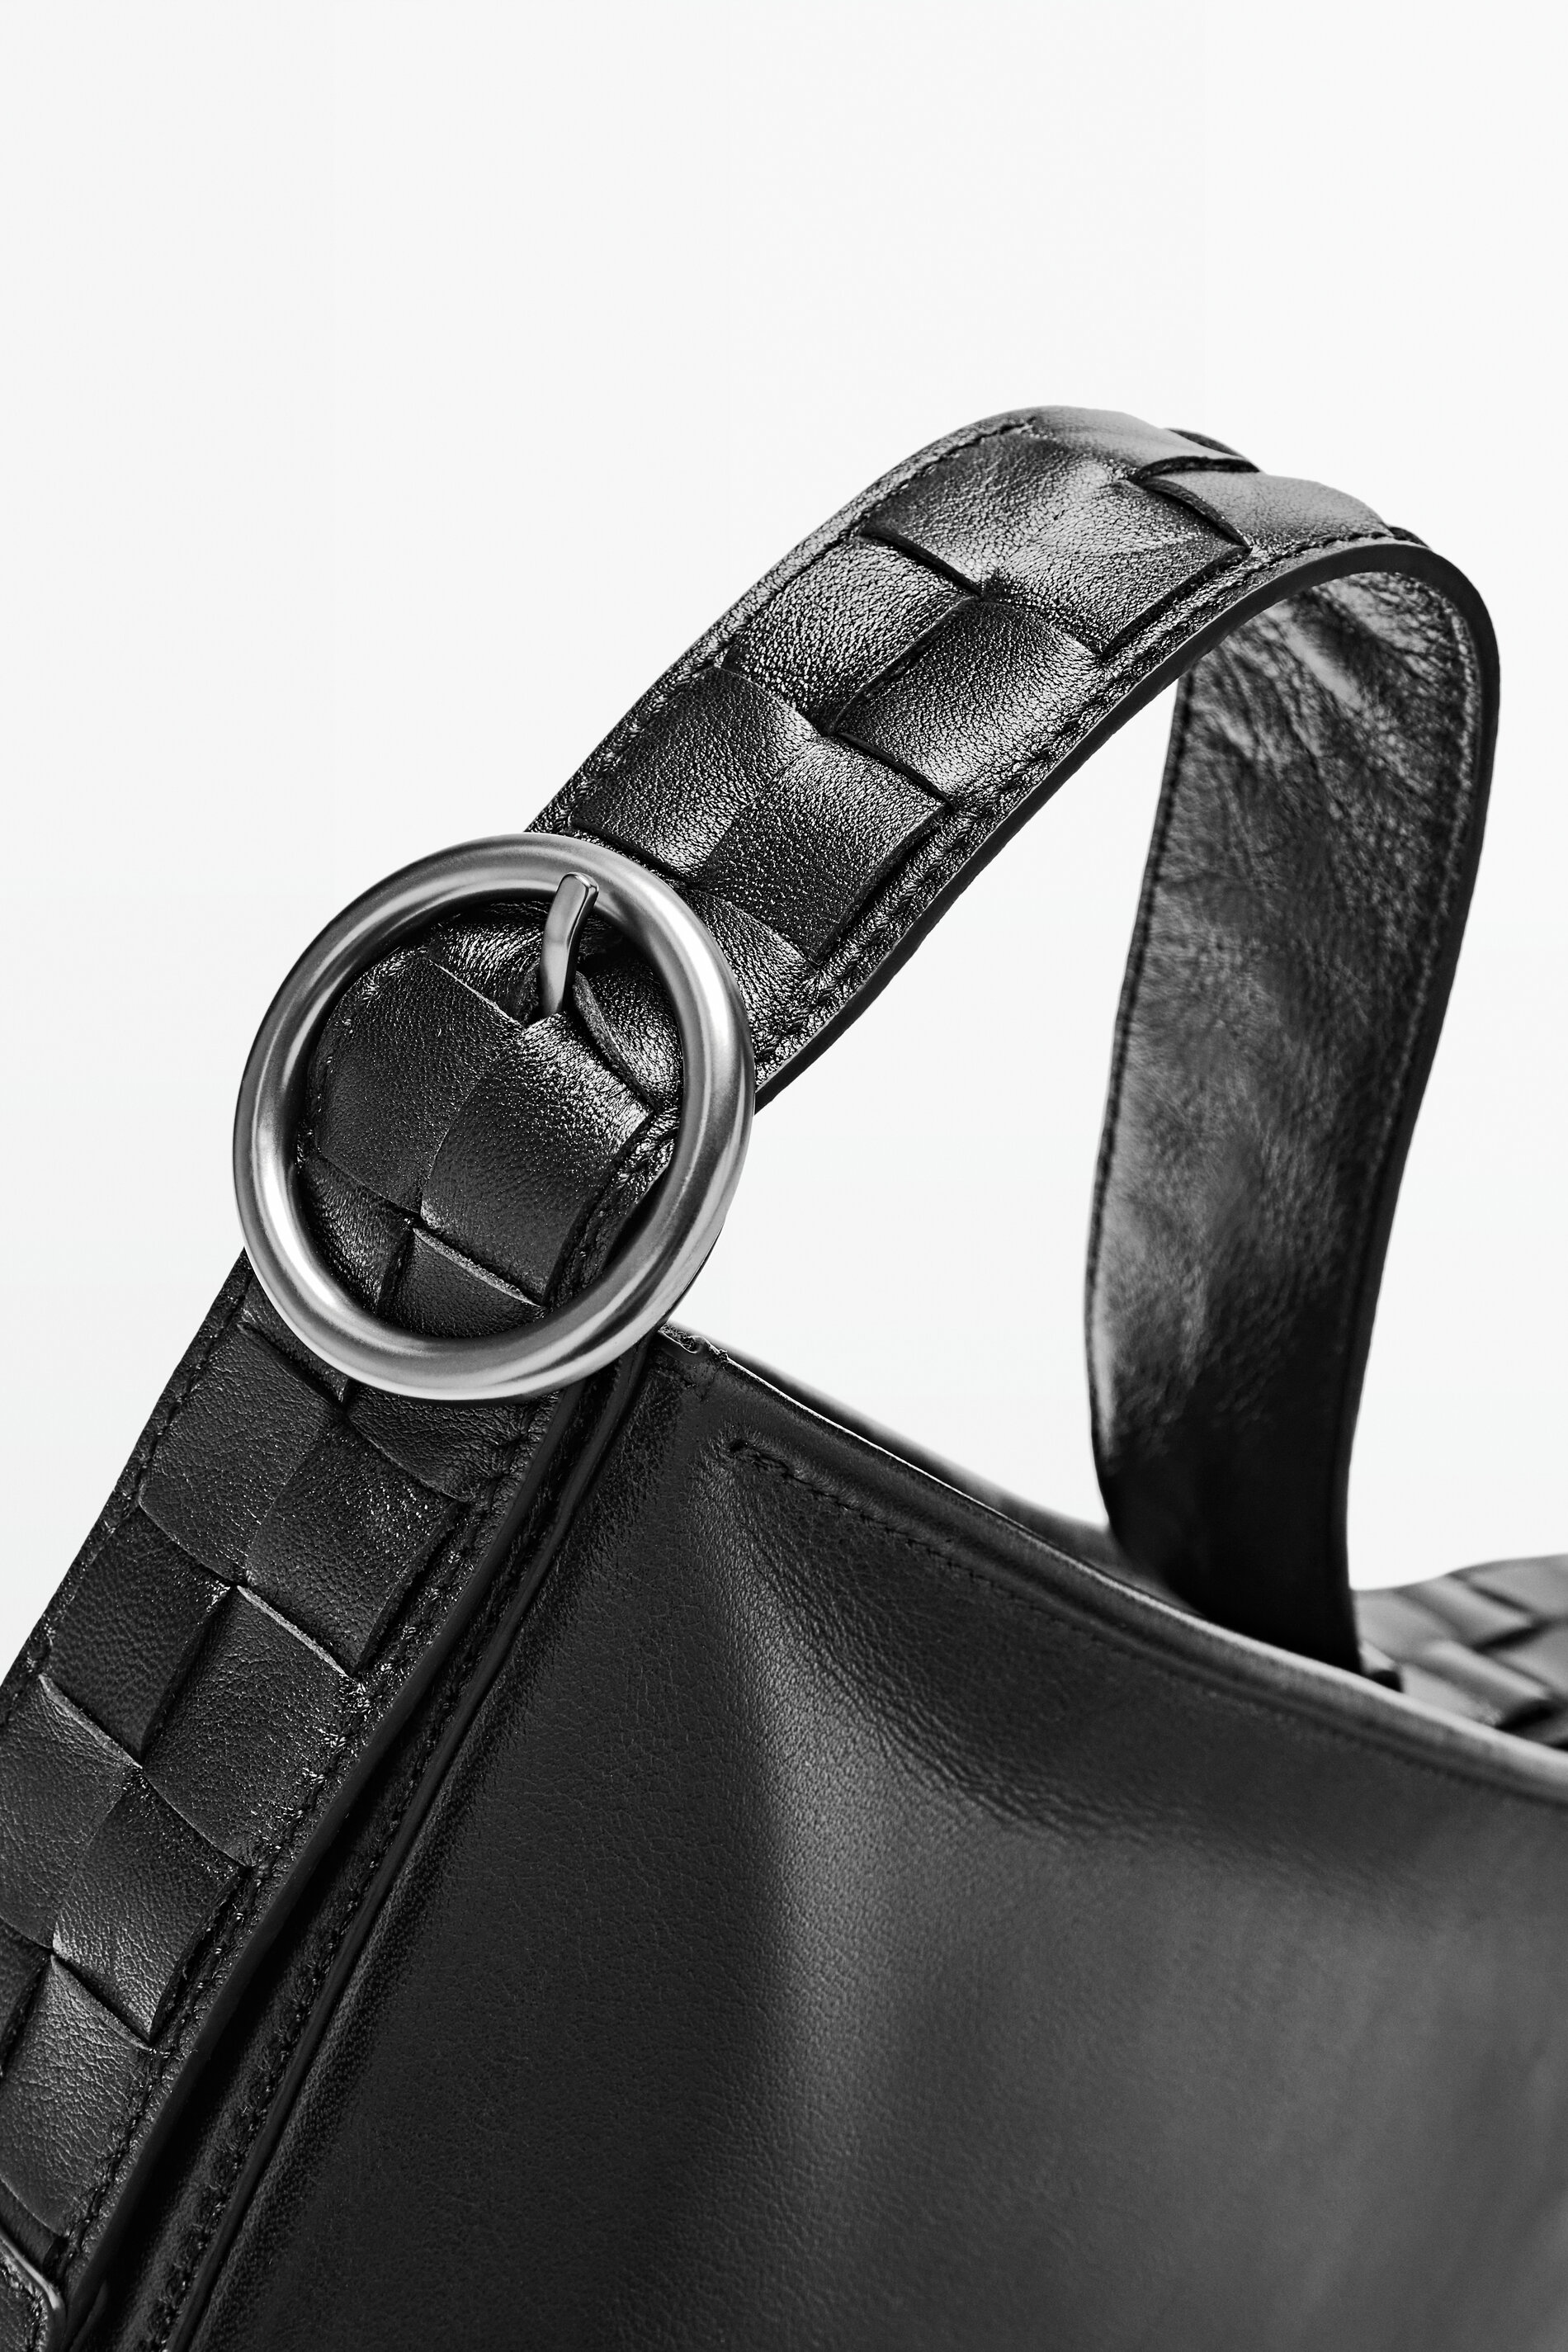 Massimo Dutti Half Moon Bag With Braided Leather Strap - Big Apple Buddy